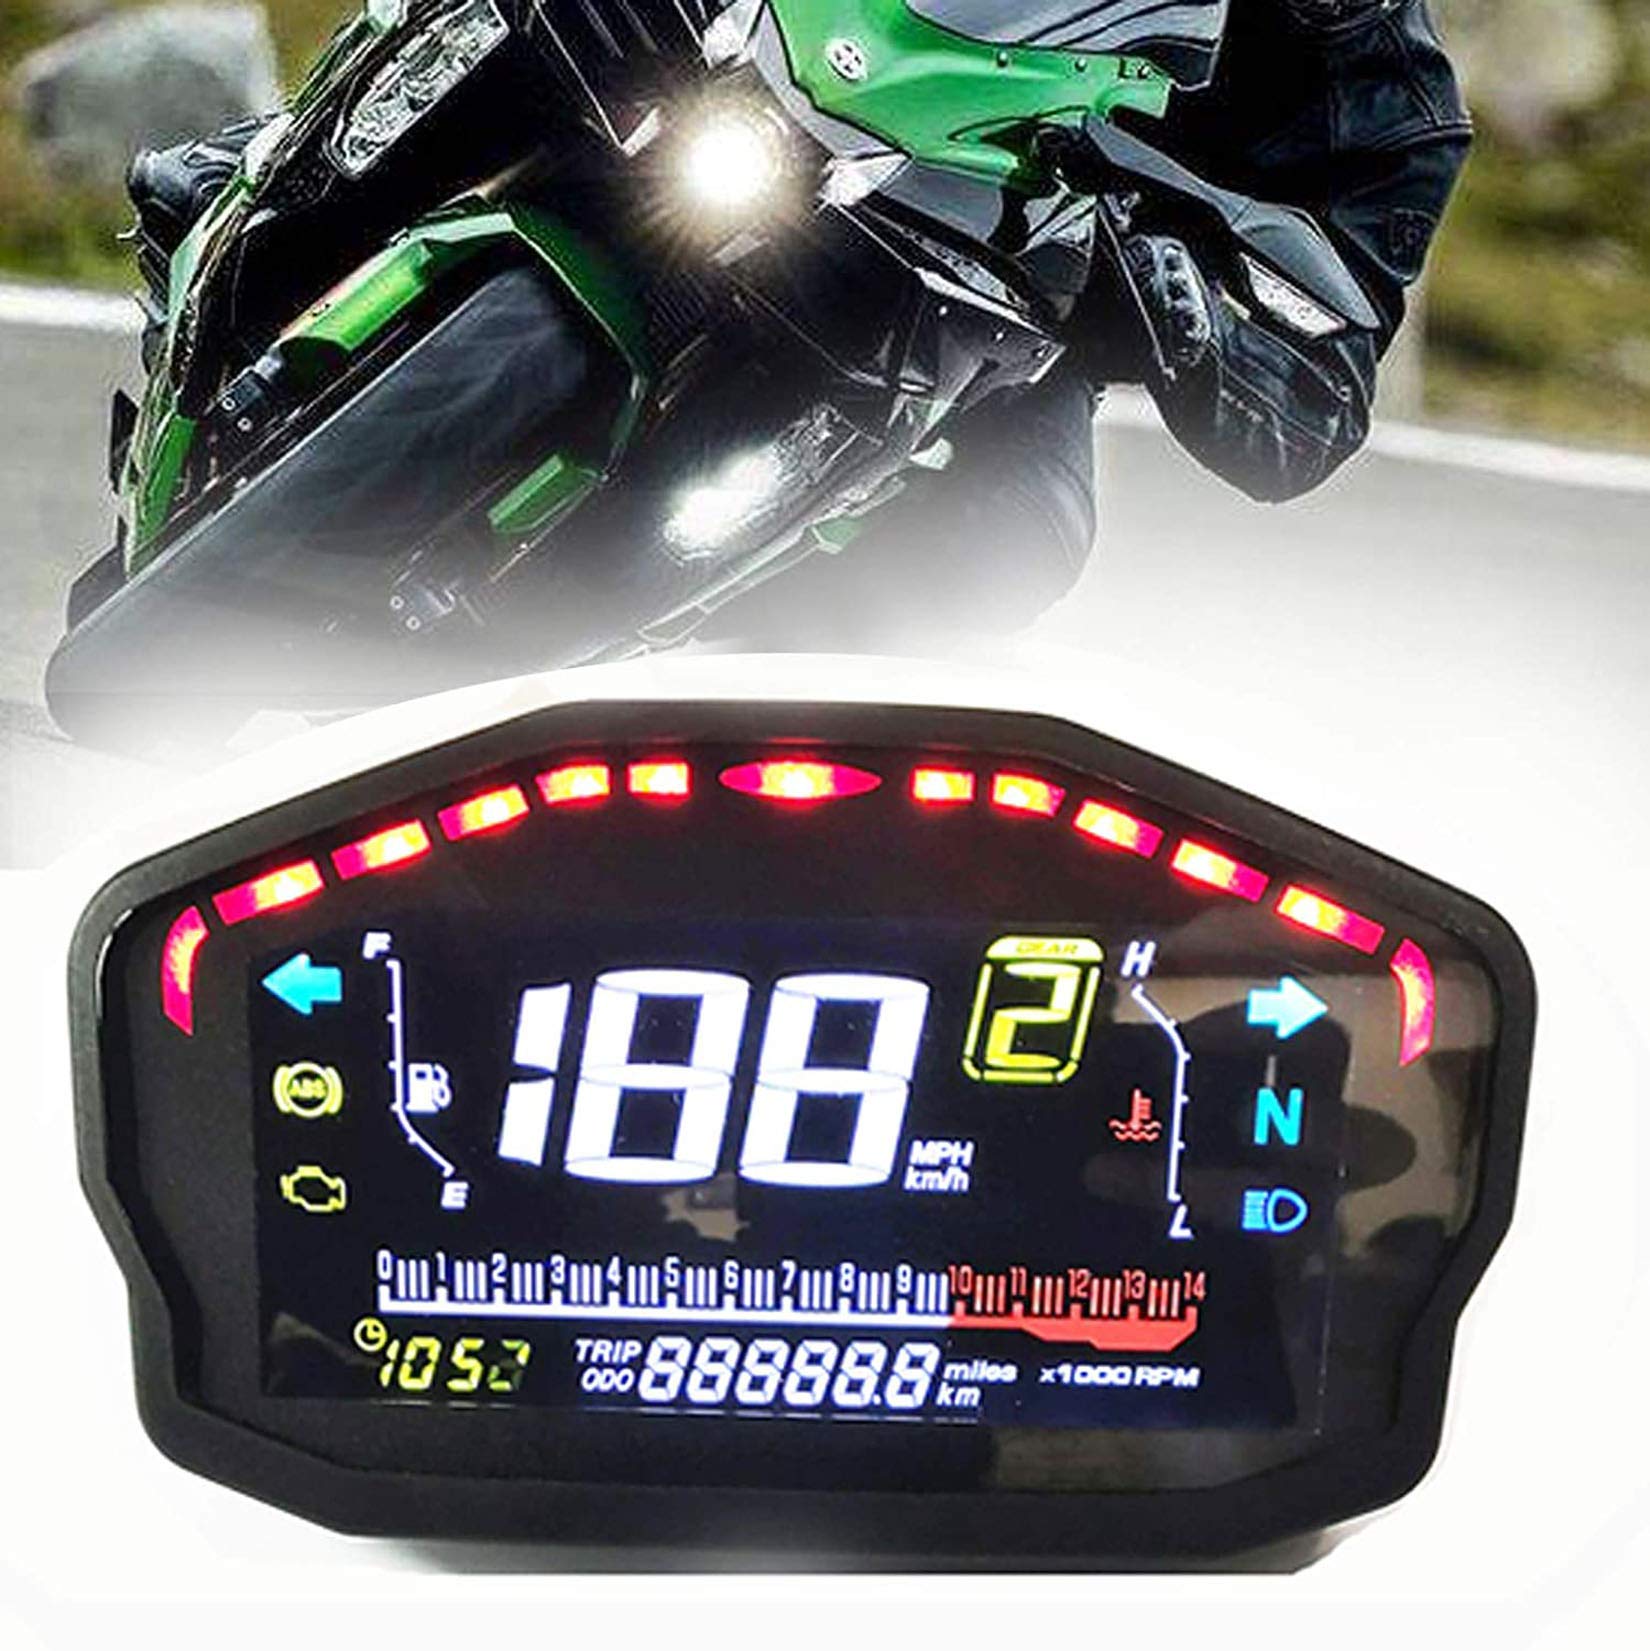 SAMDO Universal Motorcycle Speedometer Odometer Tachometer 14000 RPM 199 Kph Mph Motorcycles Refit Water Temperature Gauge VA Realcolor